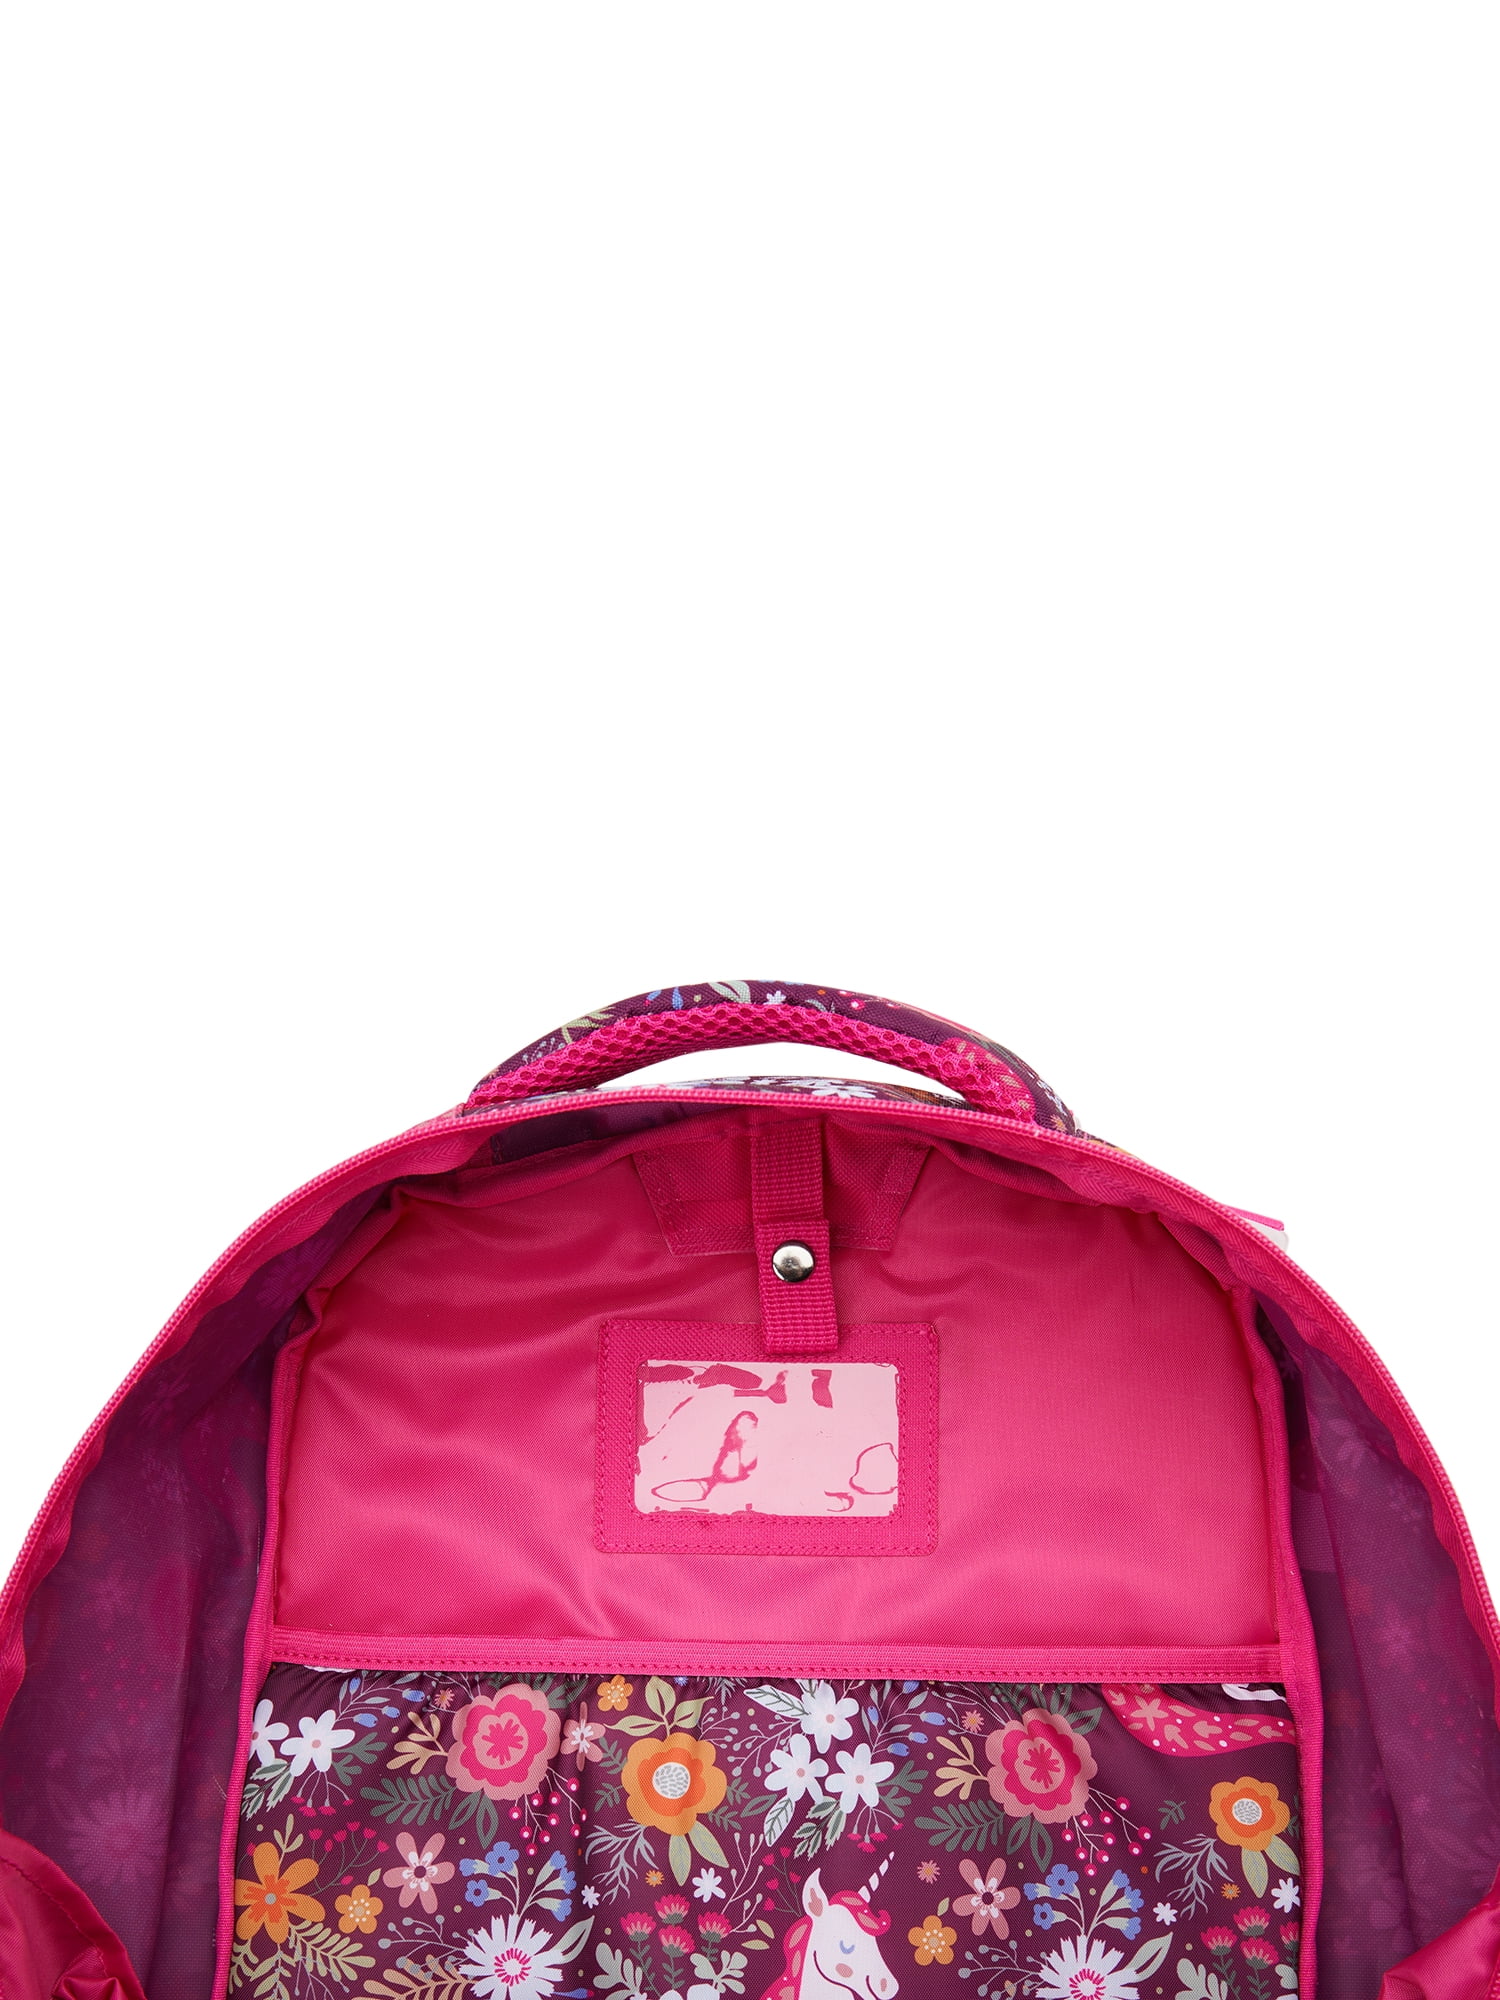 Western Chief Kids Unity Unicorn Mini Backpack - Pink